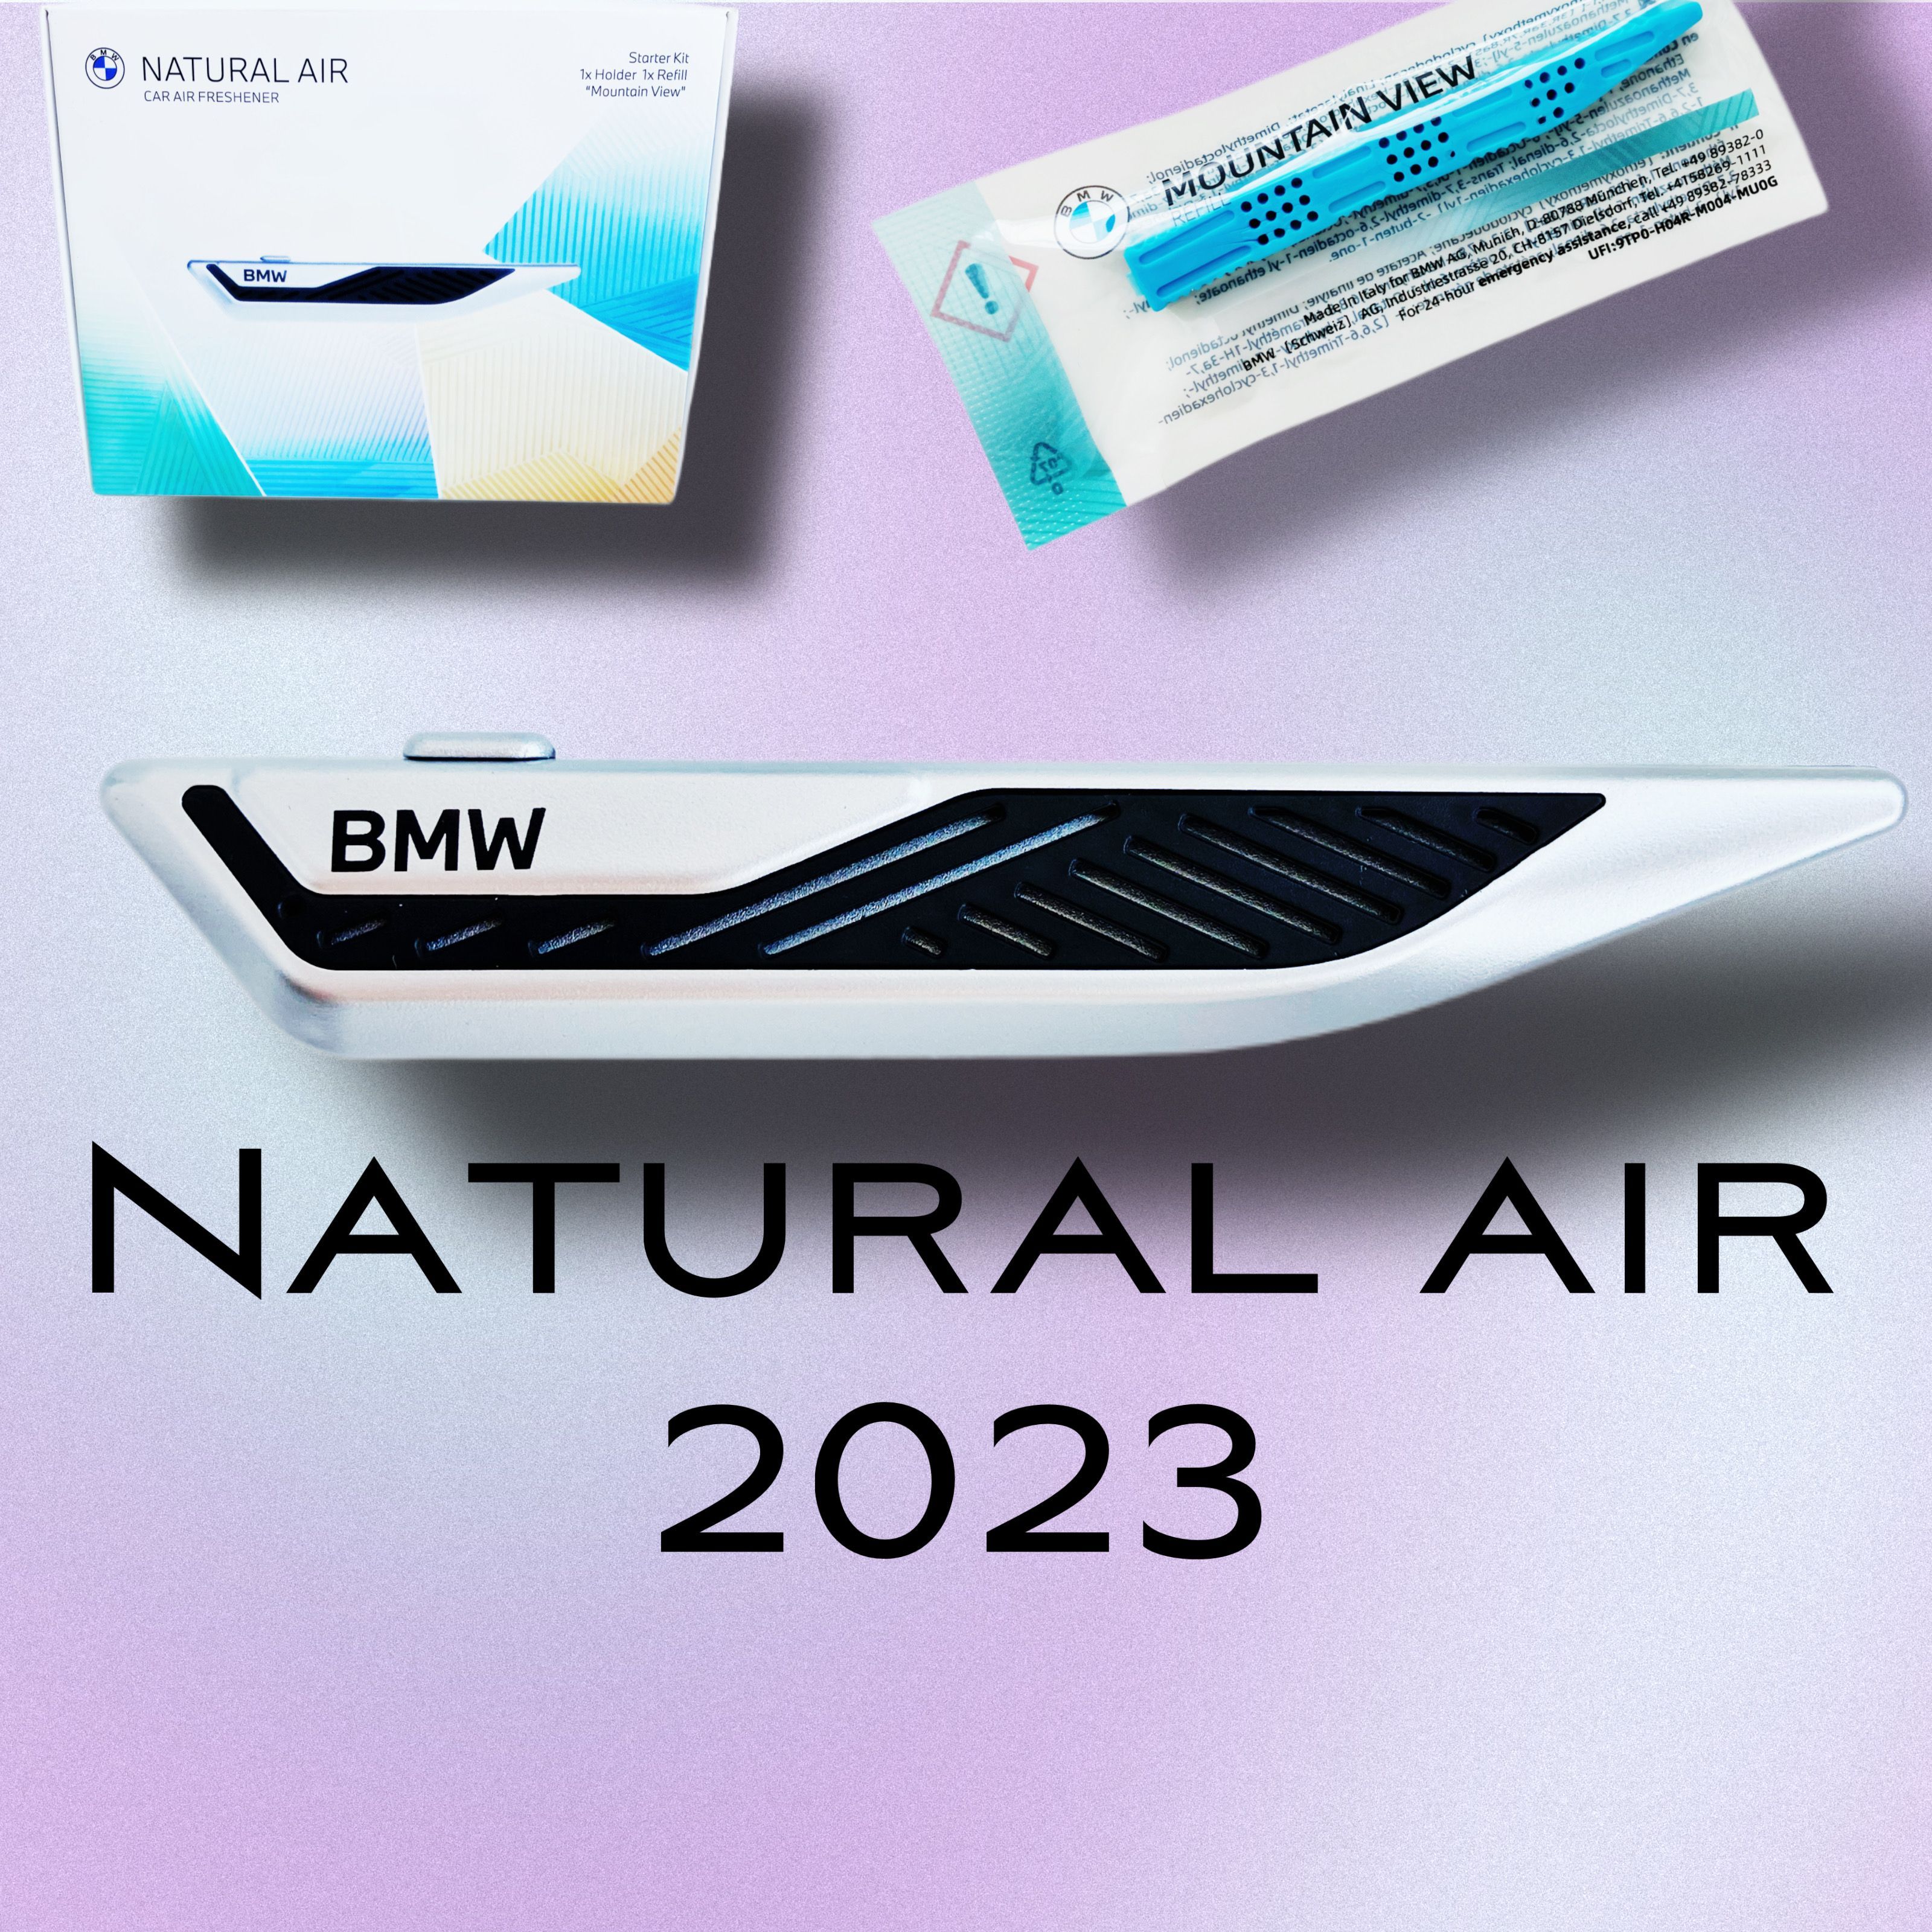 BMW natural Air Starter Kit. 83122285677ароматизатор BMW natural Air. Ароматизатор BMW Ambient Air. Ароматизатор BMW картридж. Bmw natural air